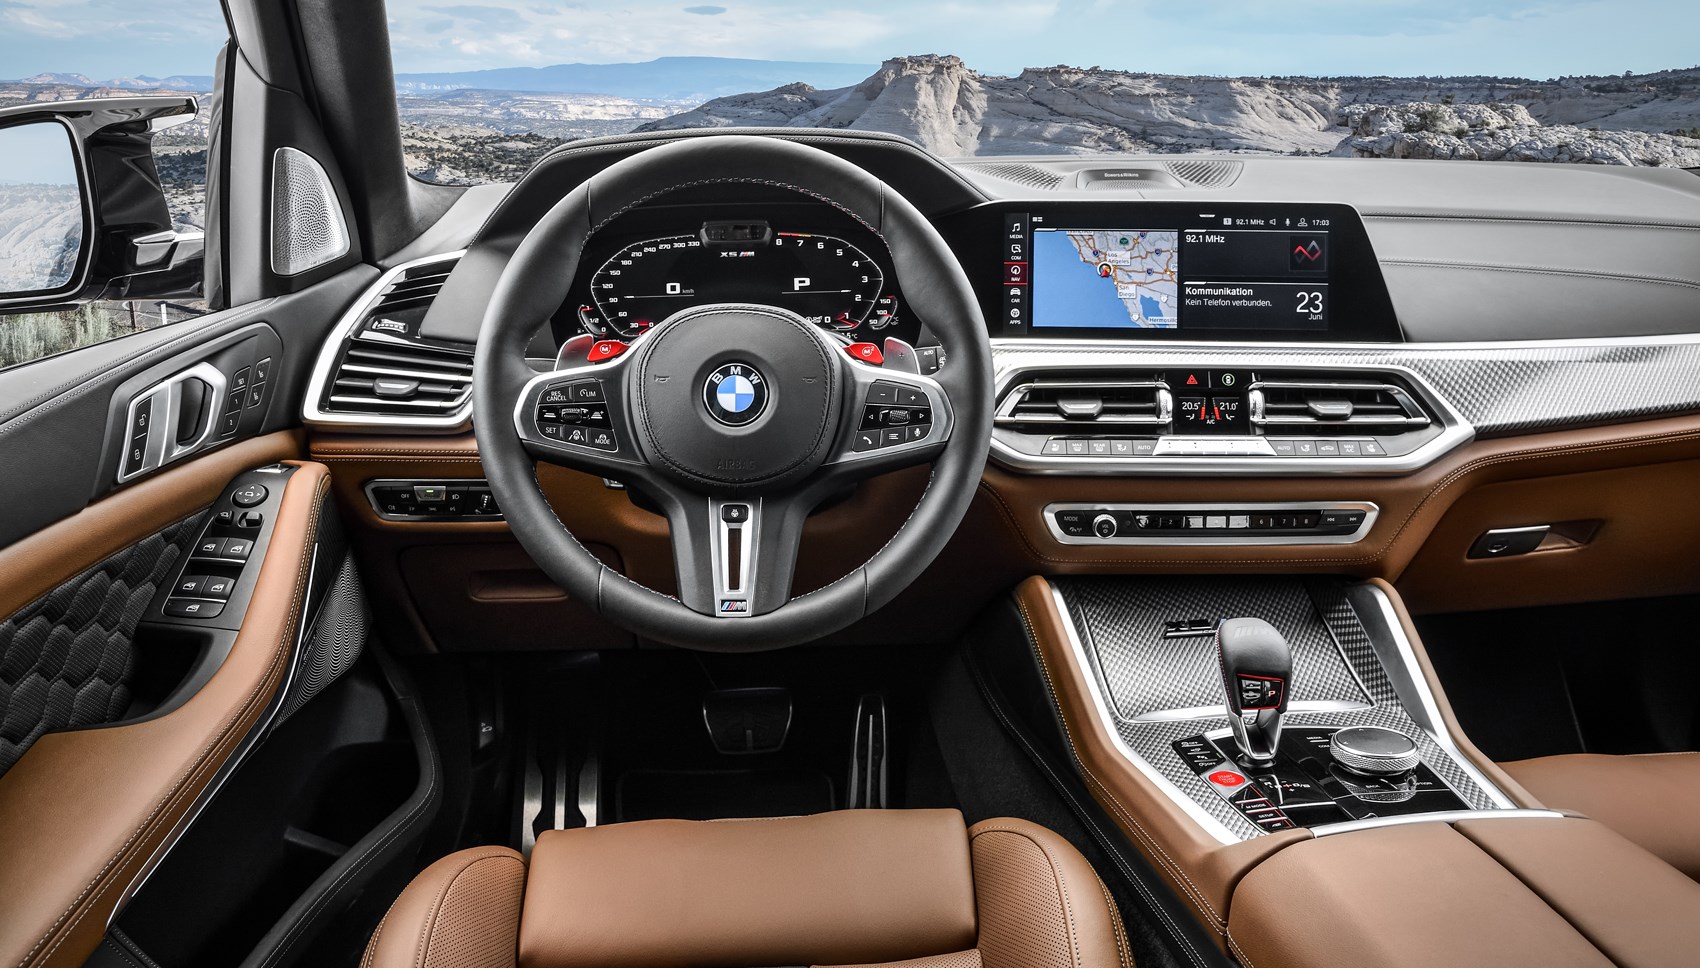 BMW X5 M interior